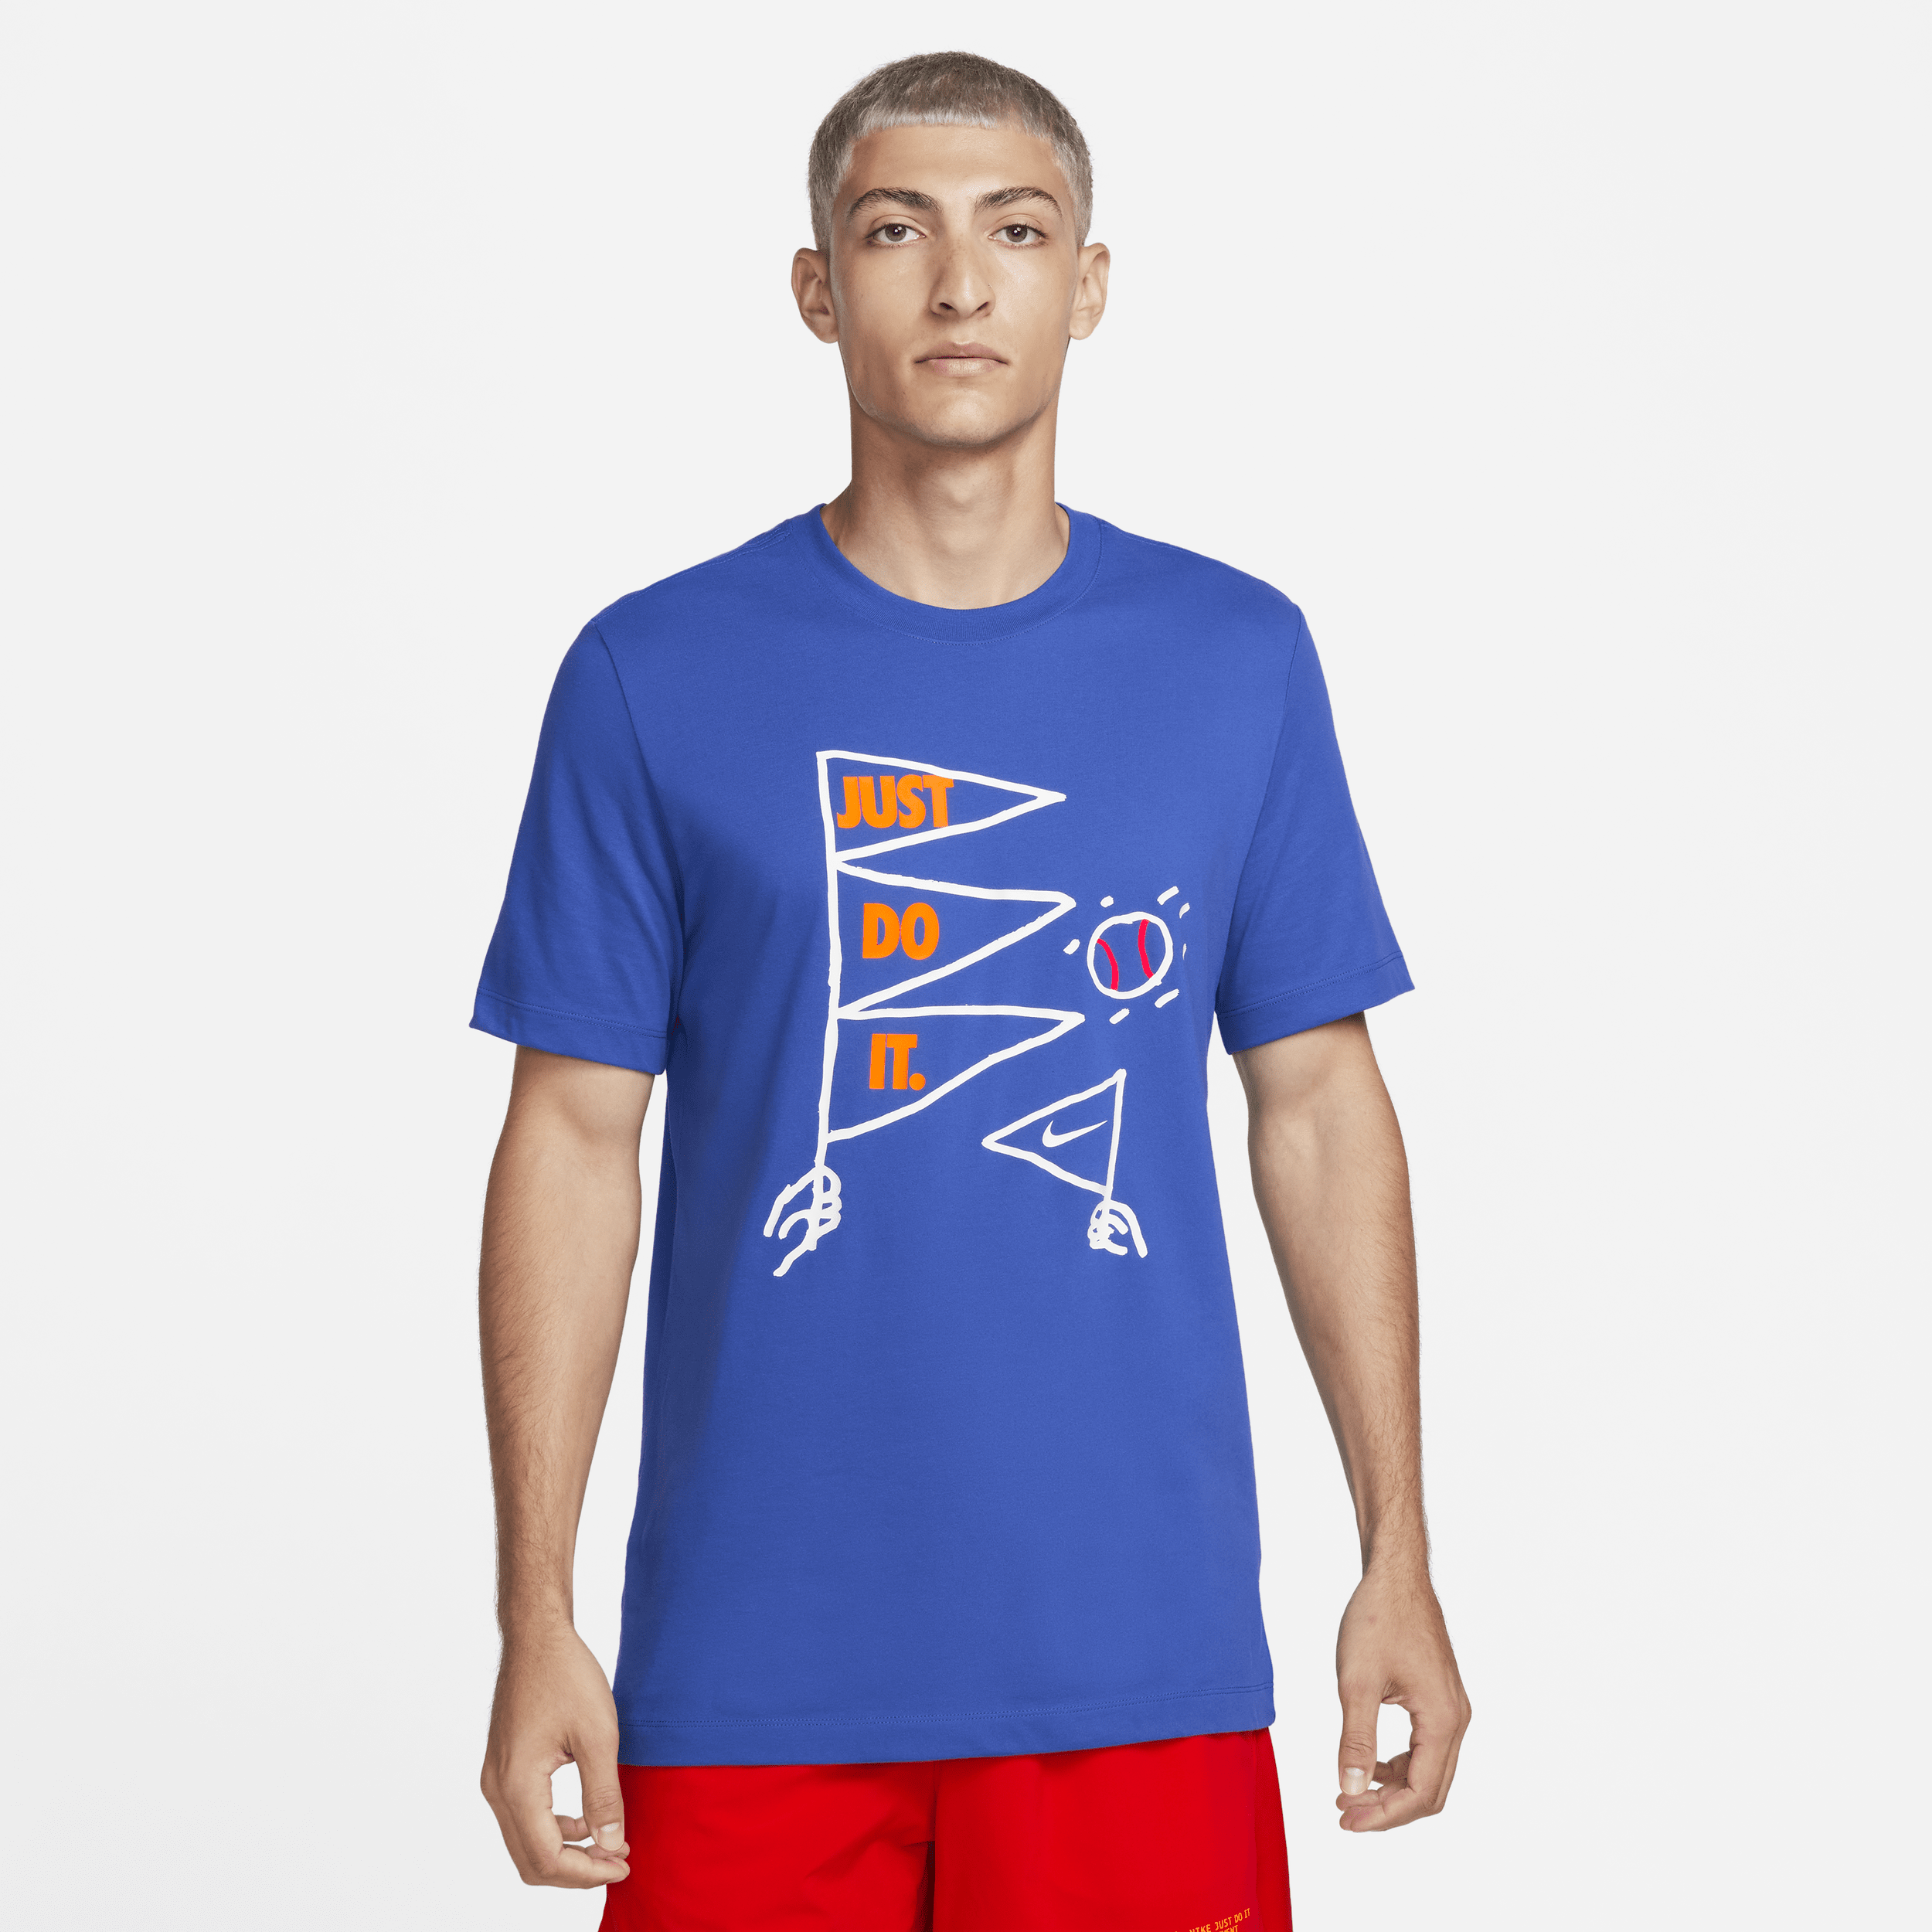 Nike Men's Dri-fit Baseball T-shirt In Blue